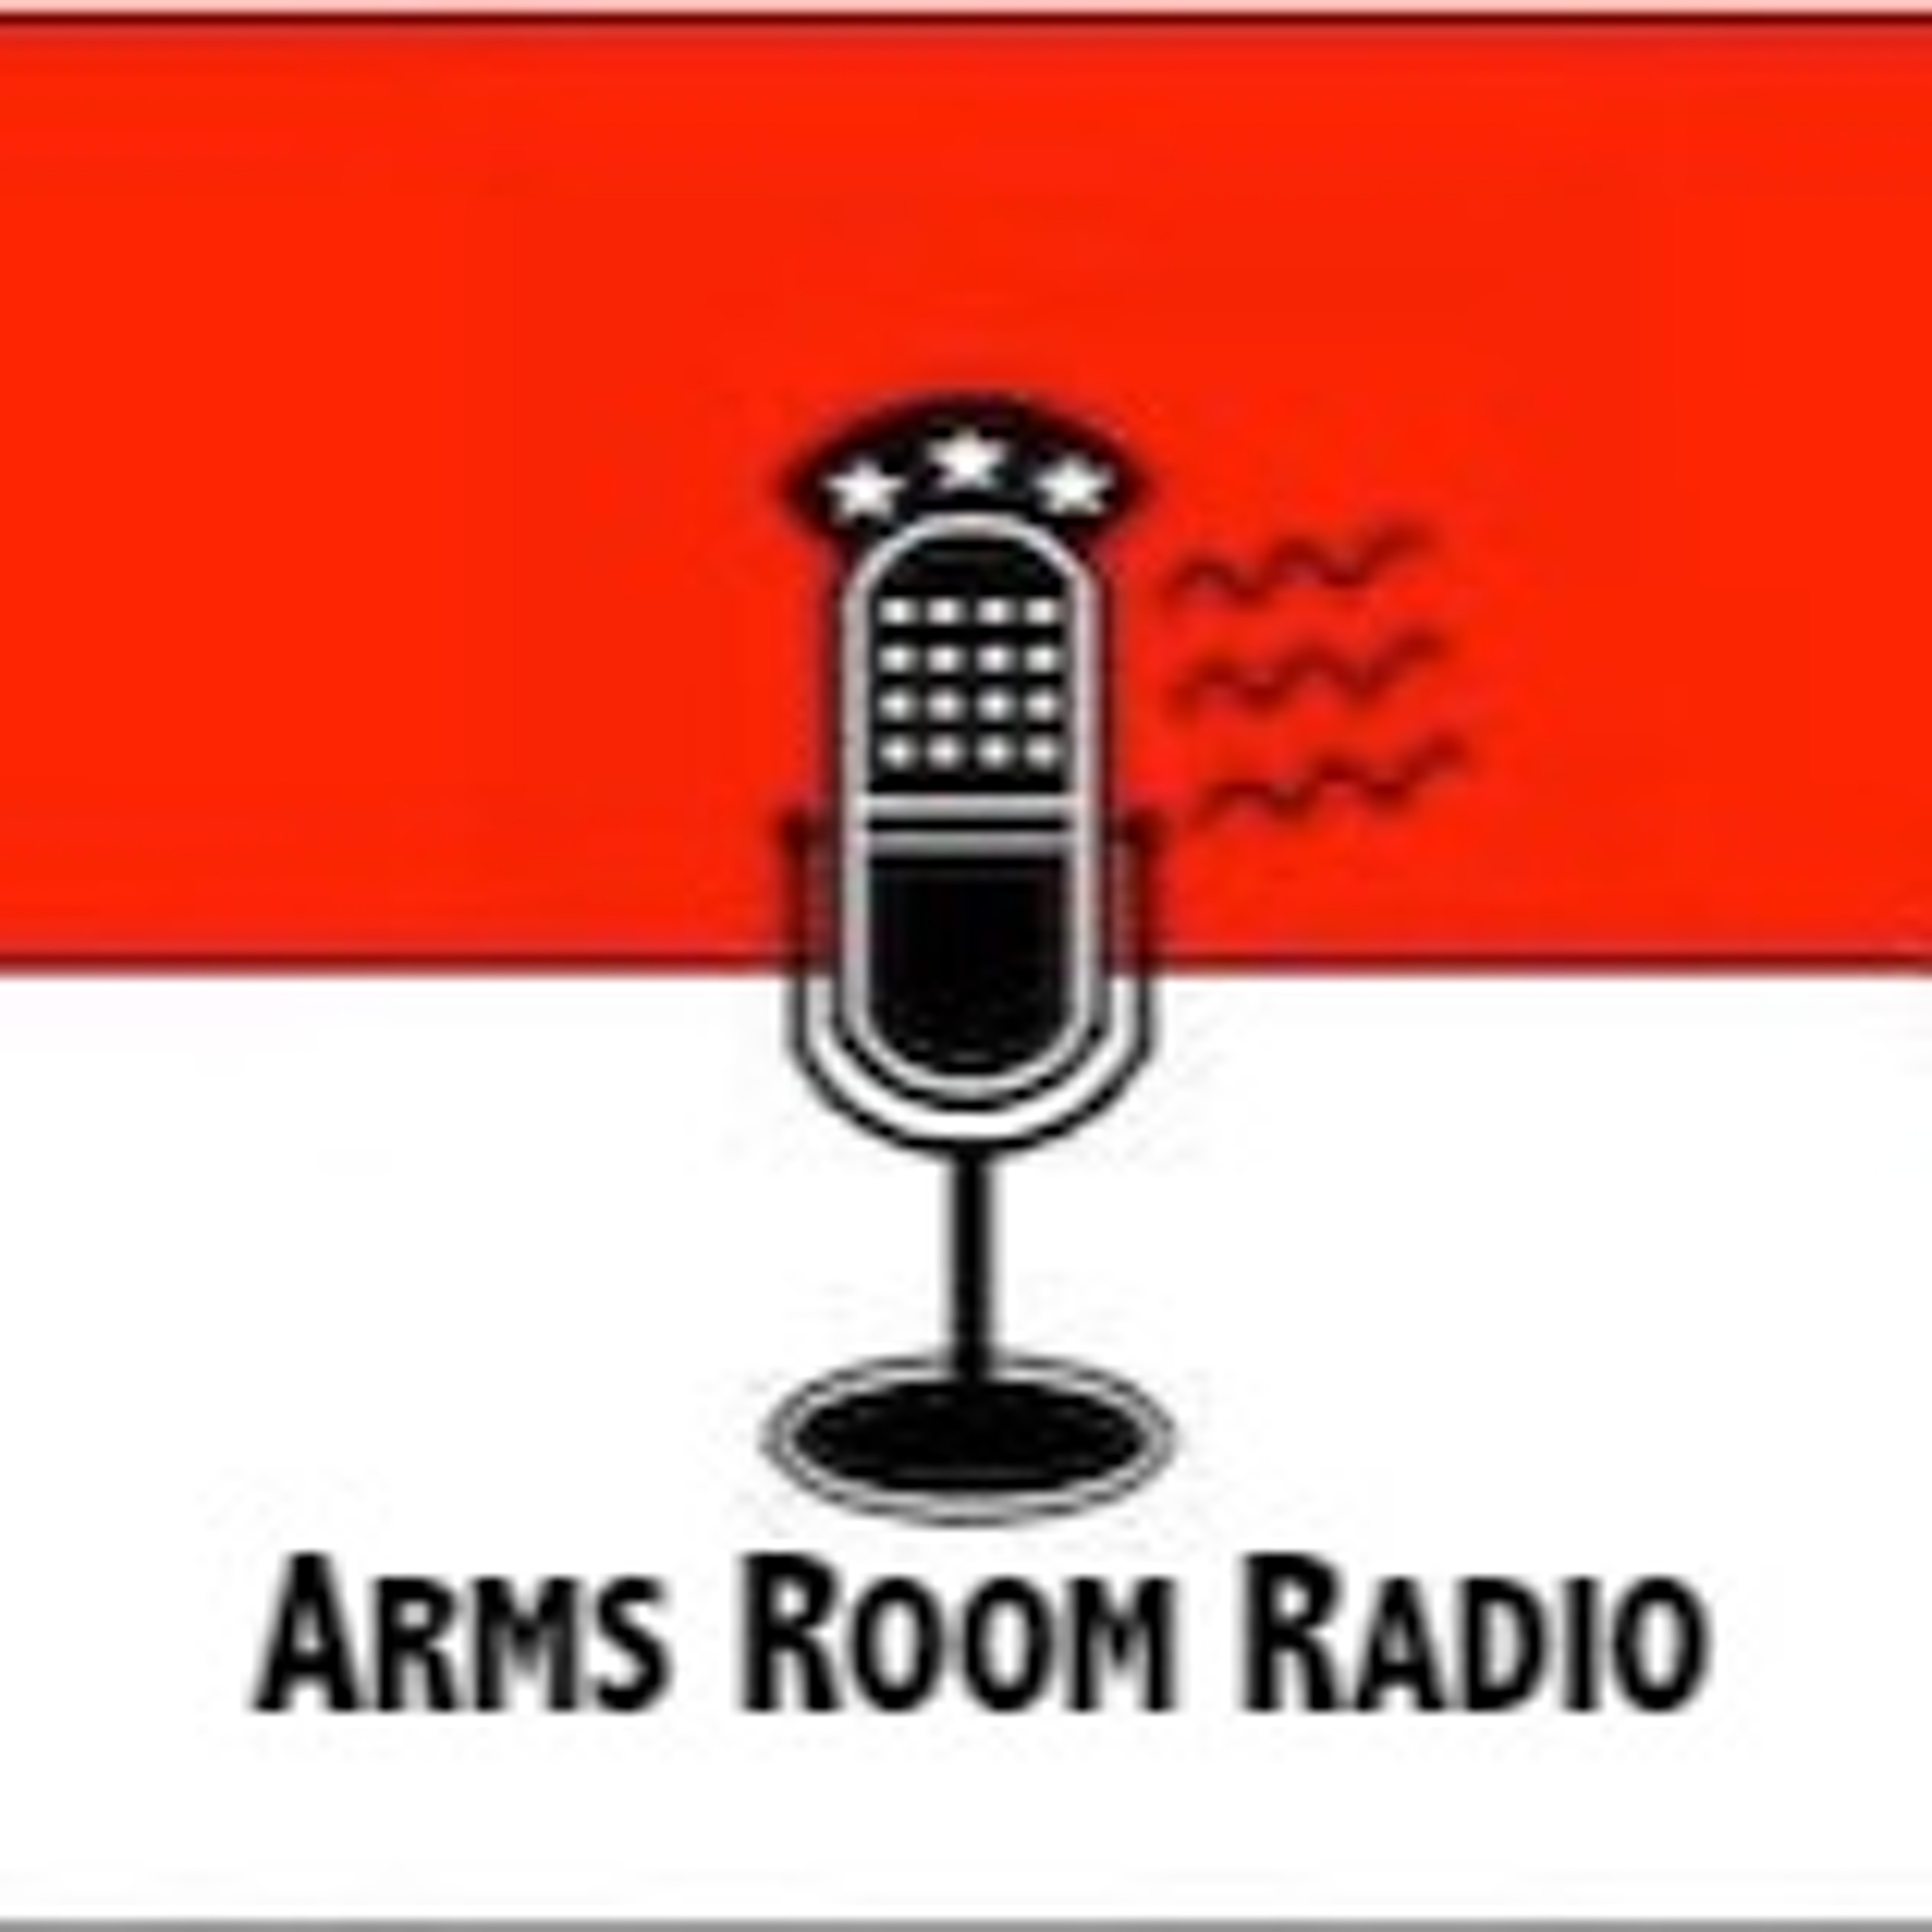 ArmsRoomRadio 05.08.21 Todd Fossey and Tawny Kitaen